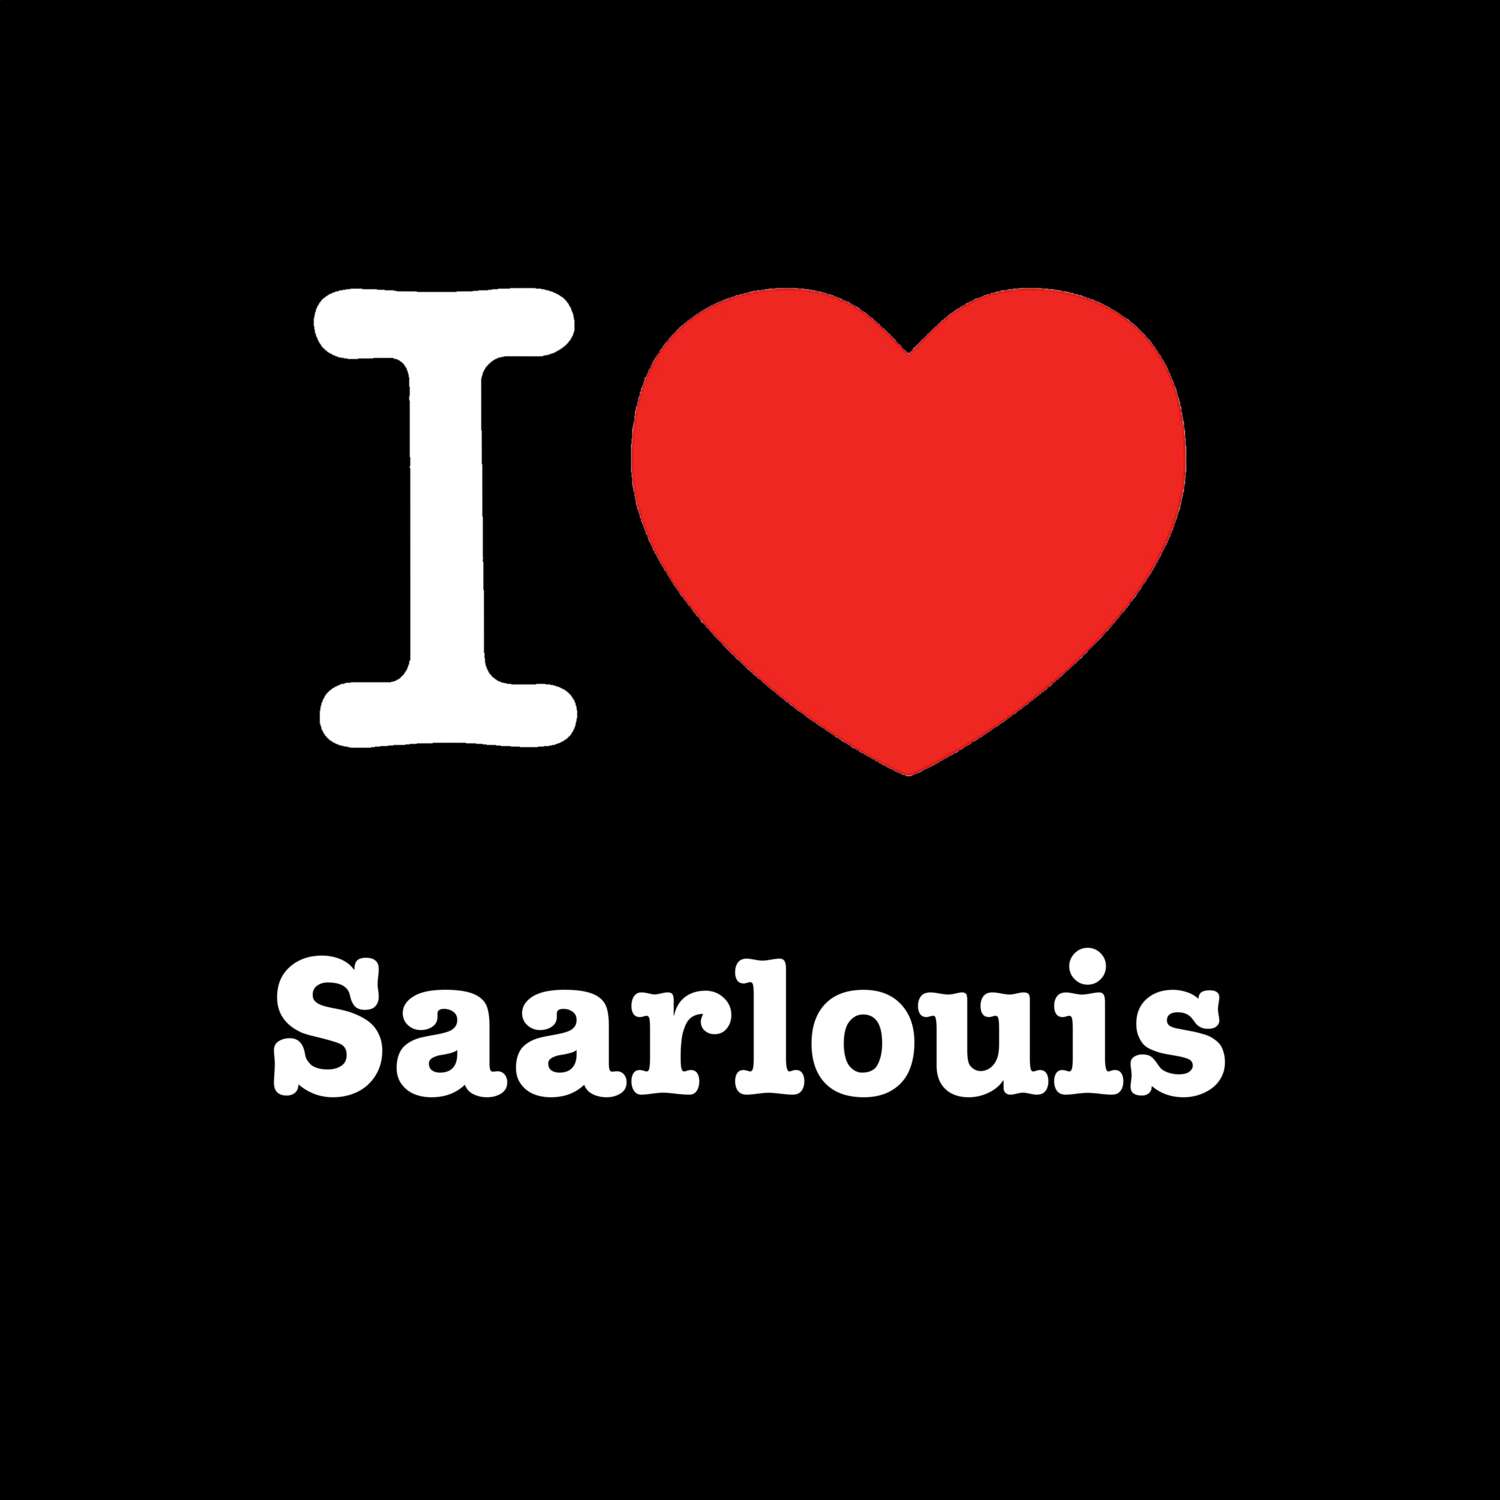 Saarlouis T-Shirt »I love«